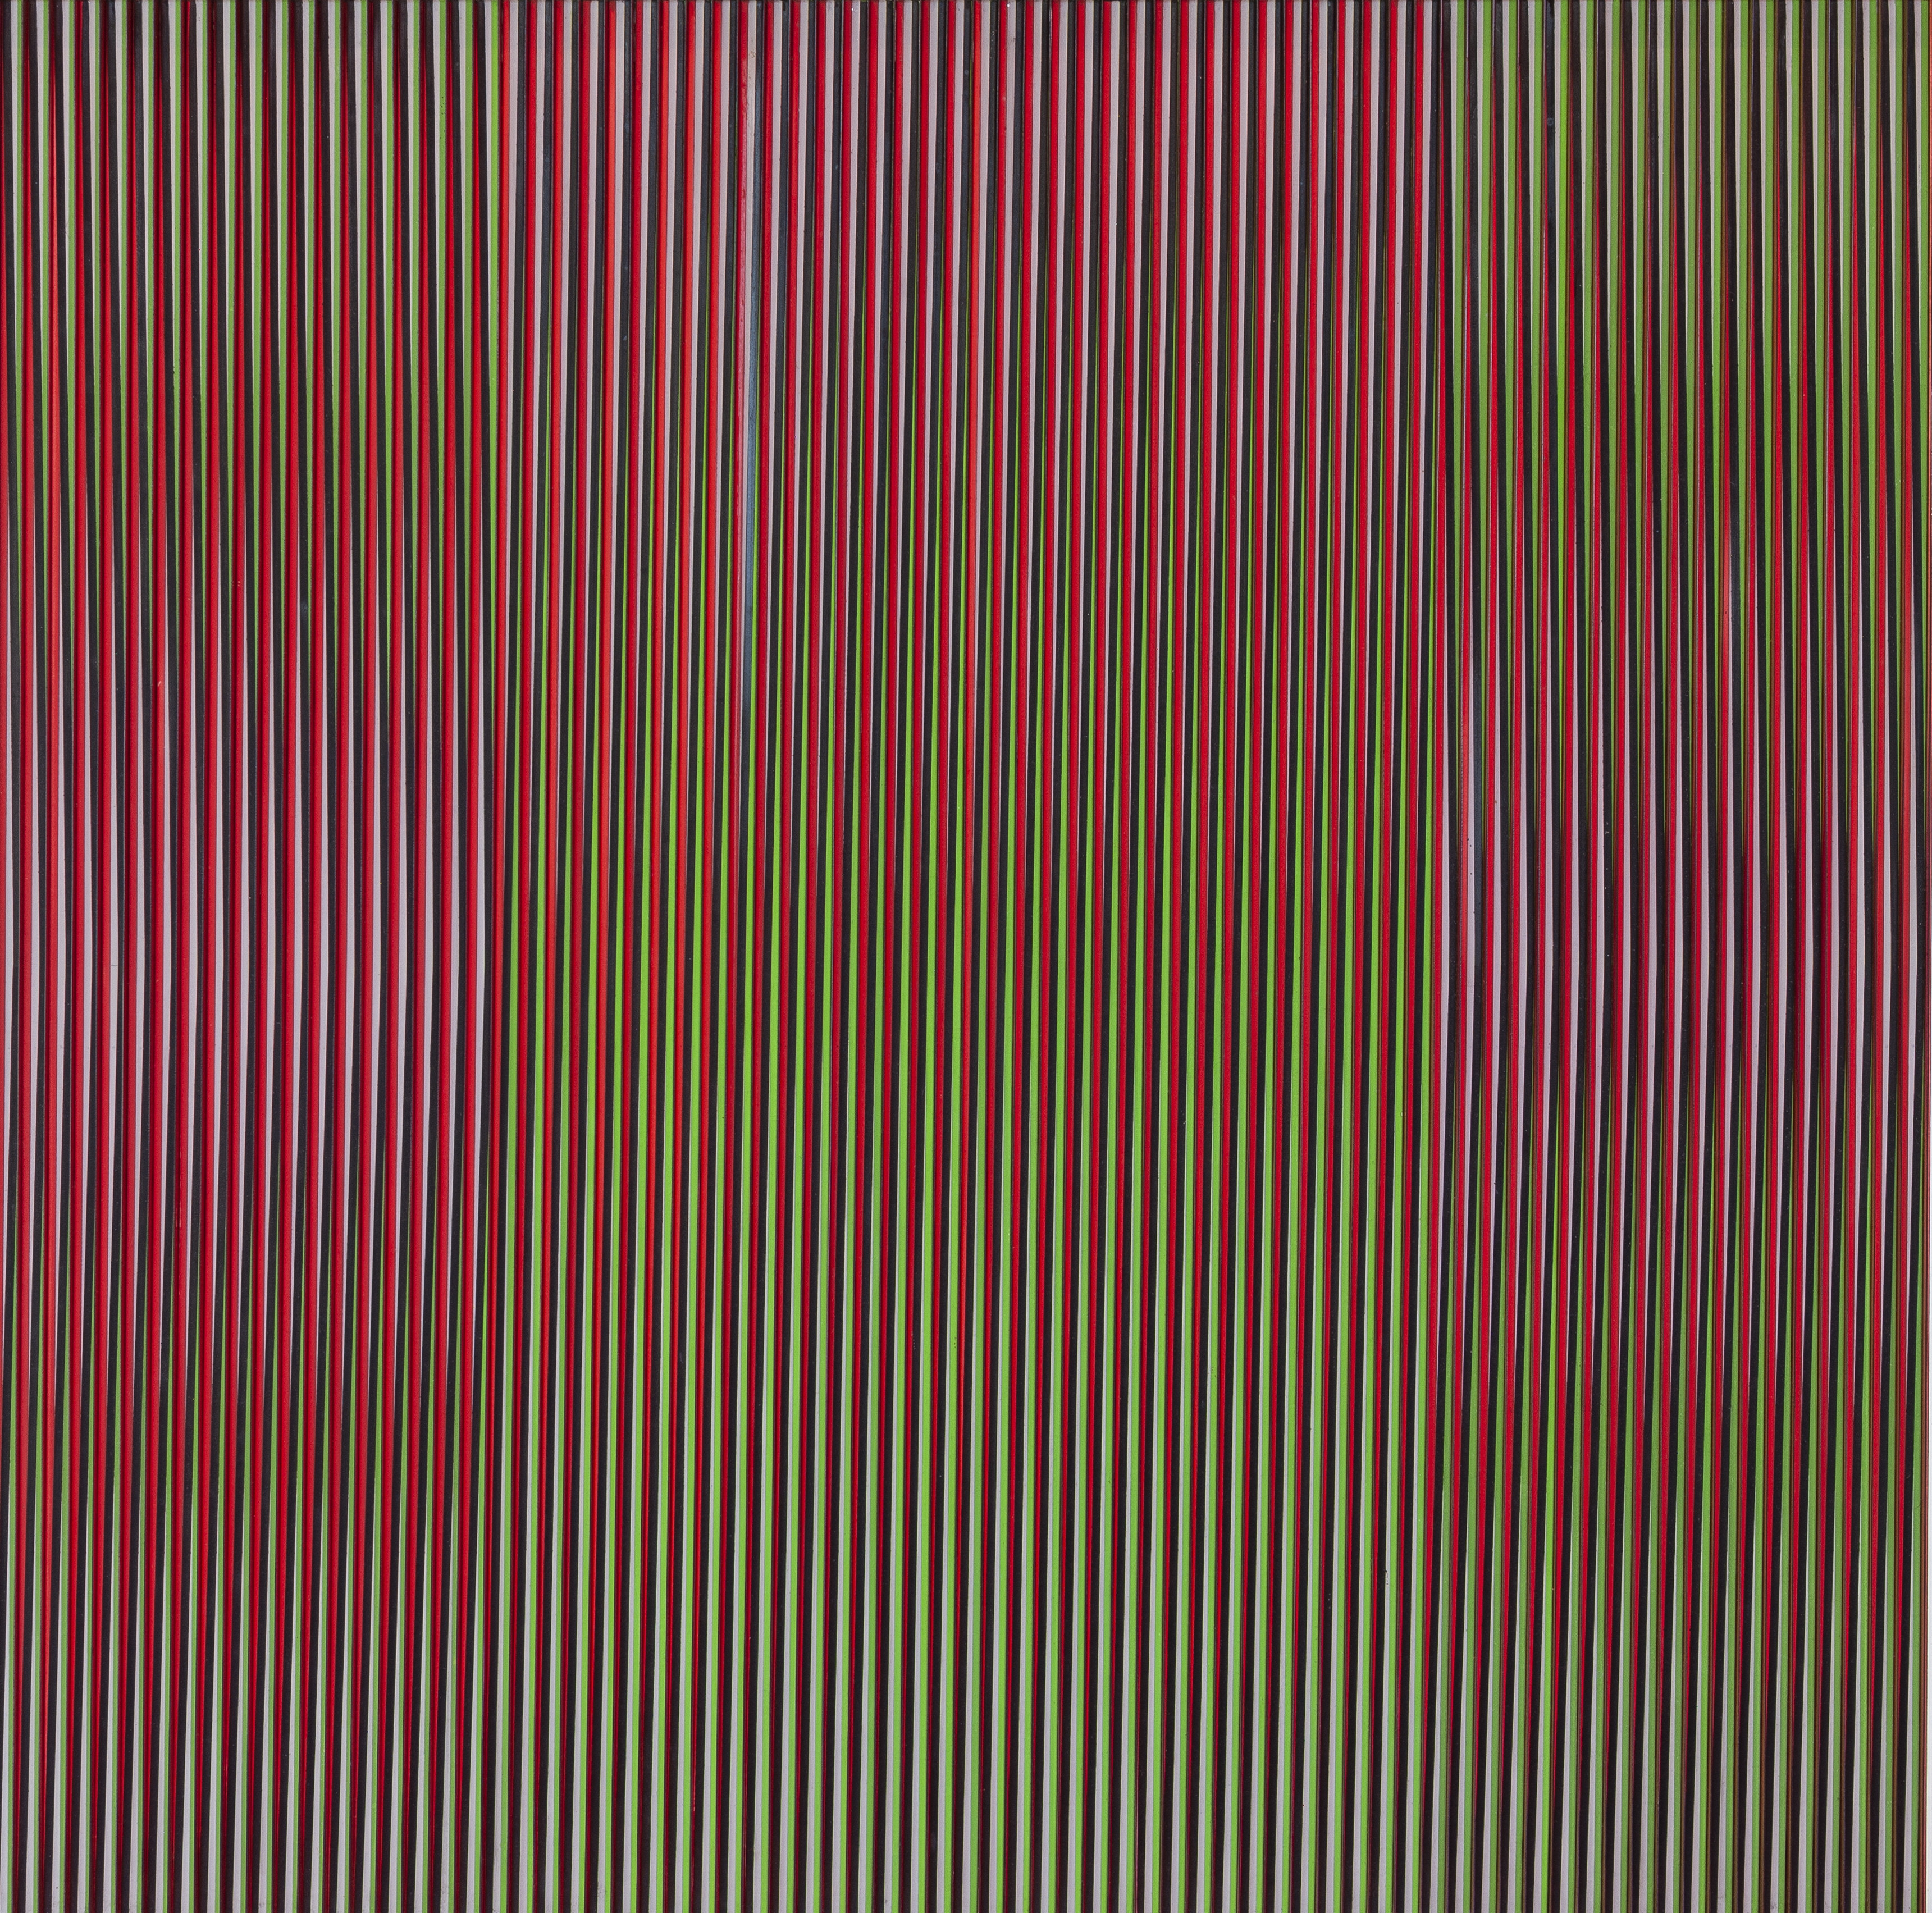 Carlos Cruz-Diez, Physichromie 887, 1976. Aluminum and Plexiglass, 31 1/2 x 31 1/2 in.